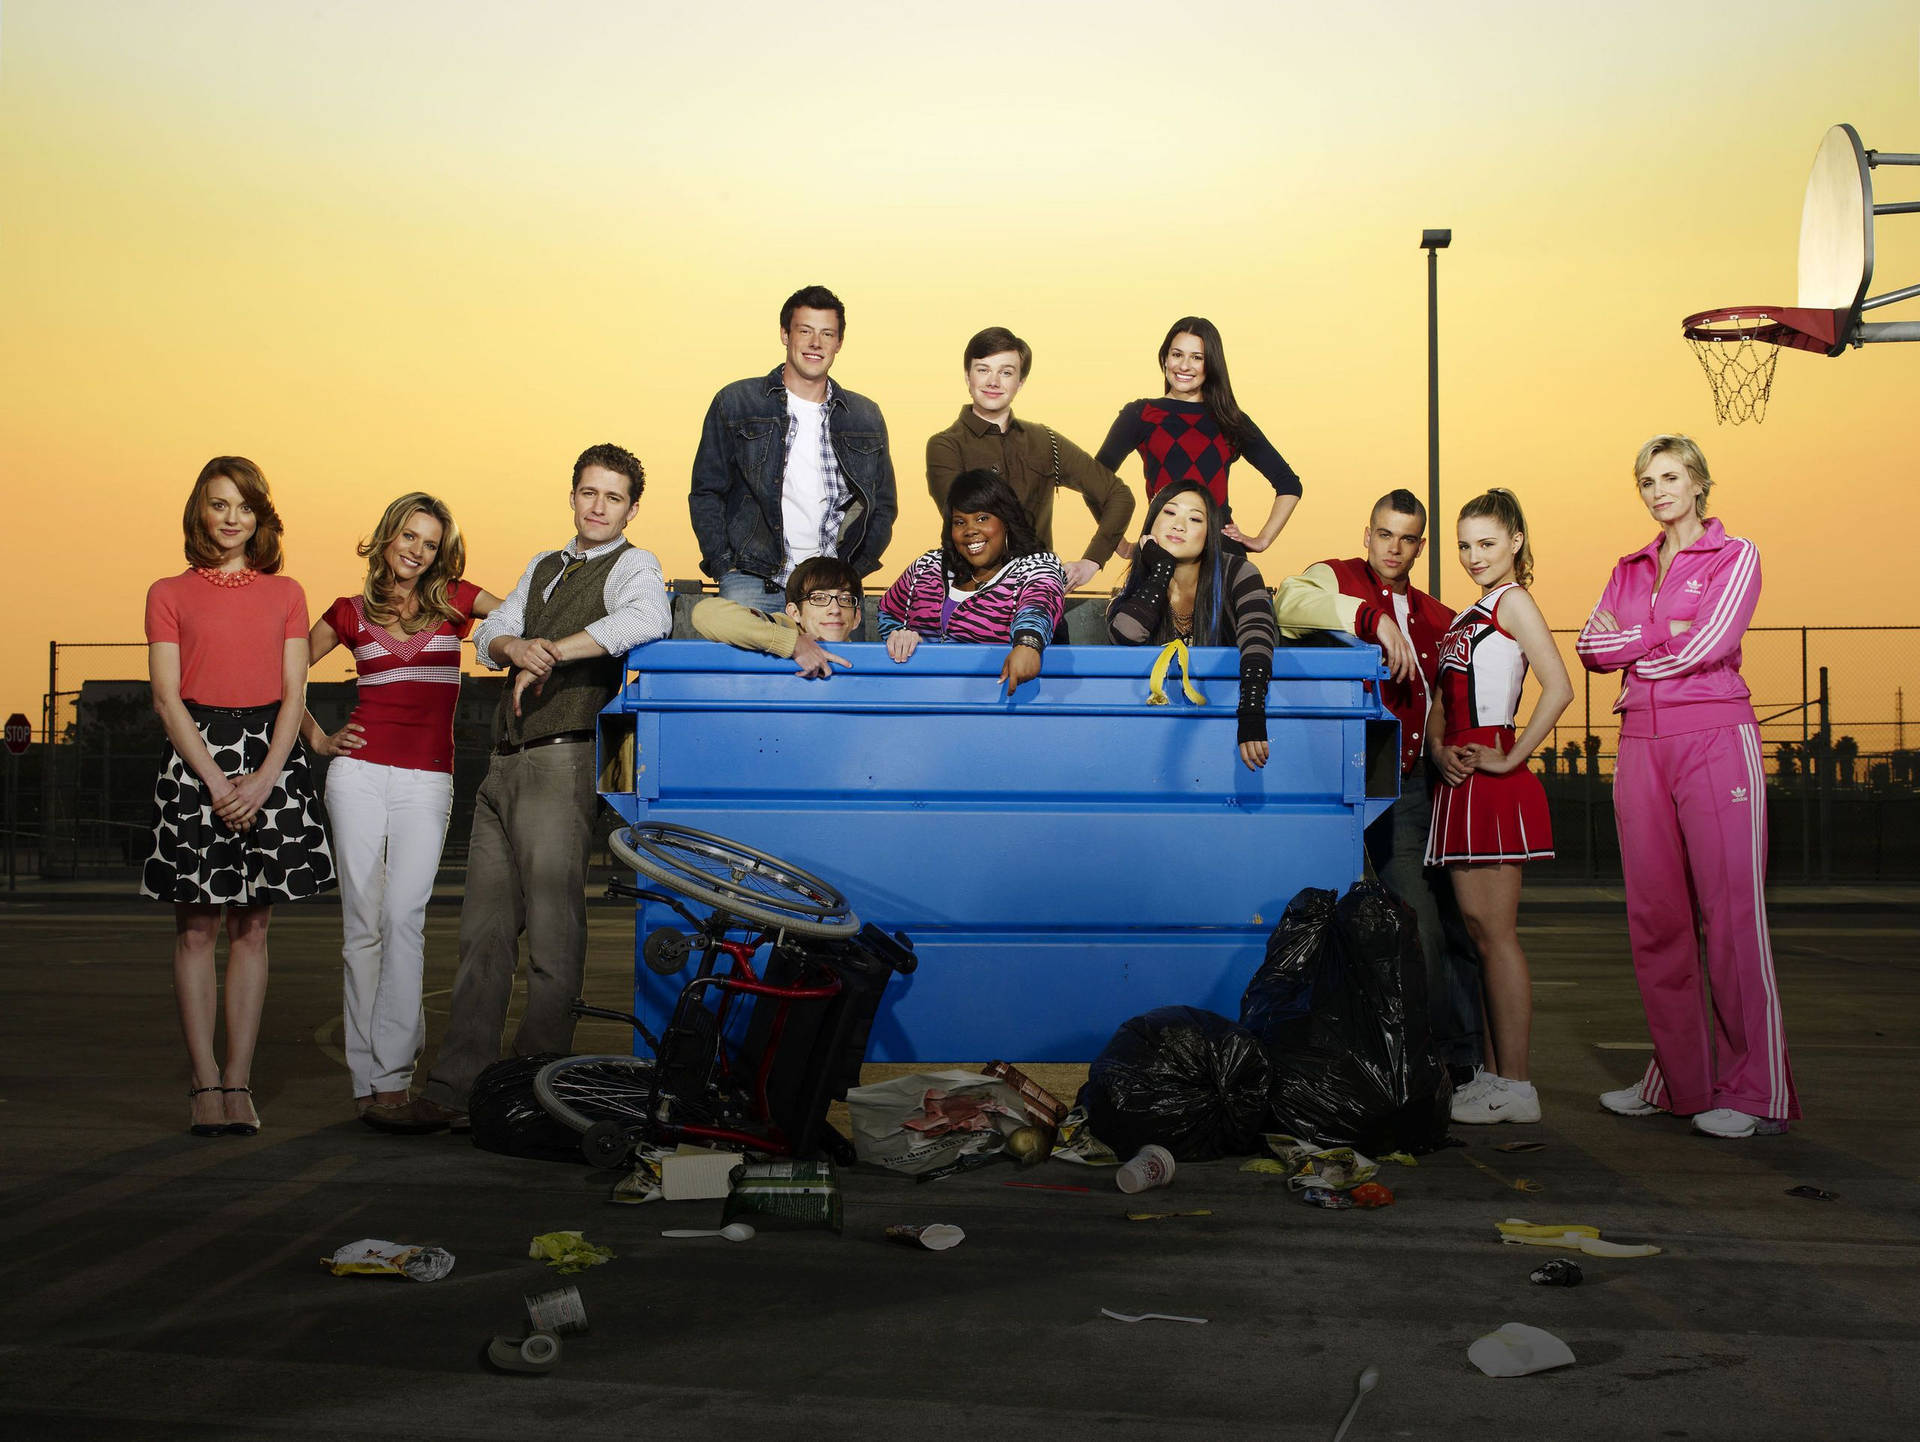 Glee Cast Members In Season 1 Episode 10 Photoshoot Wallpaper